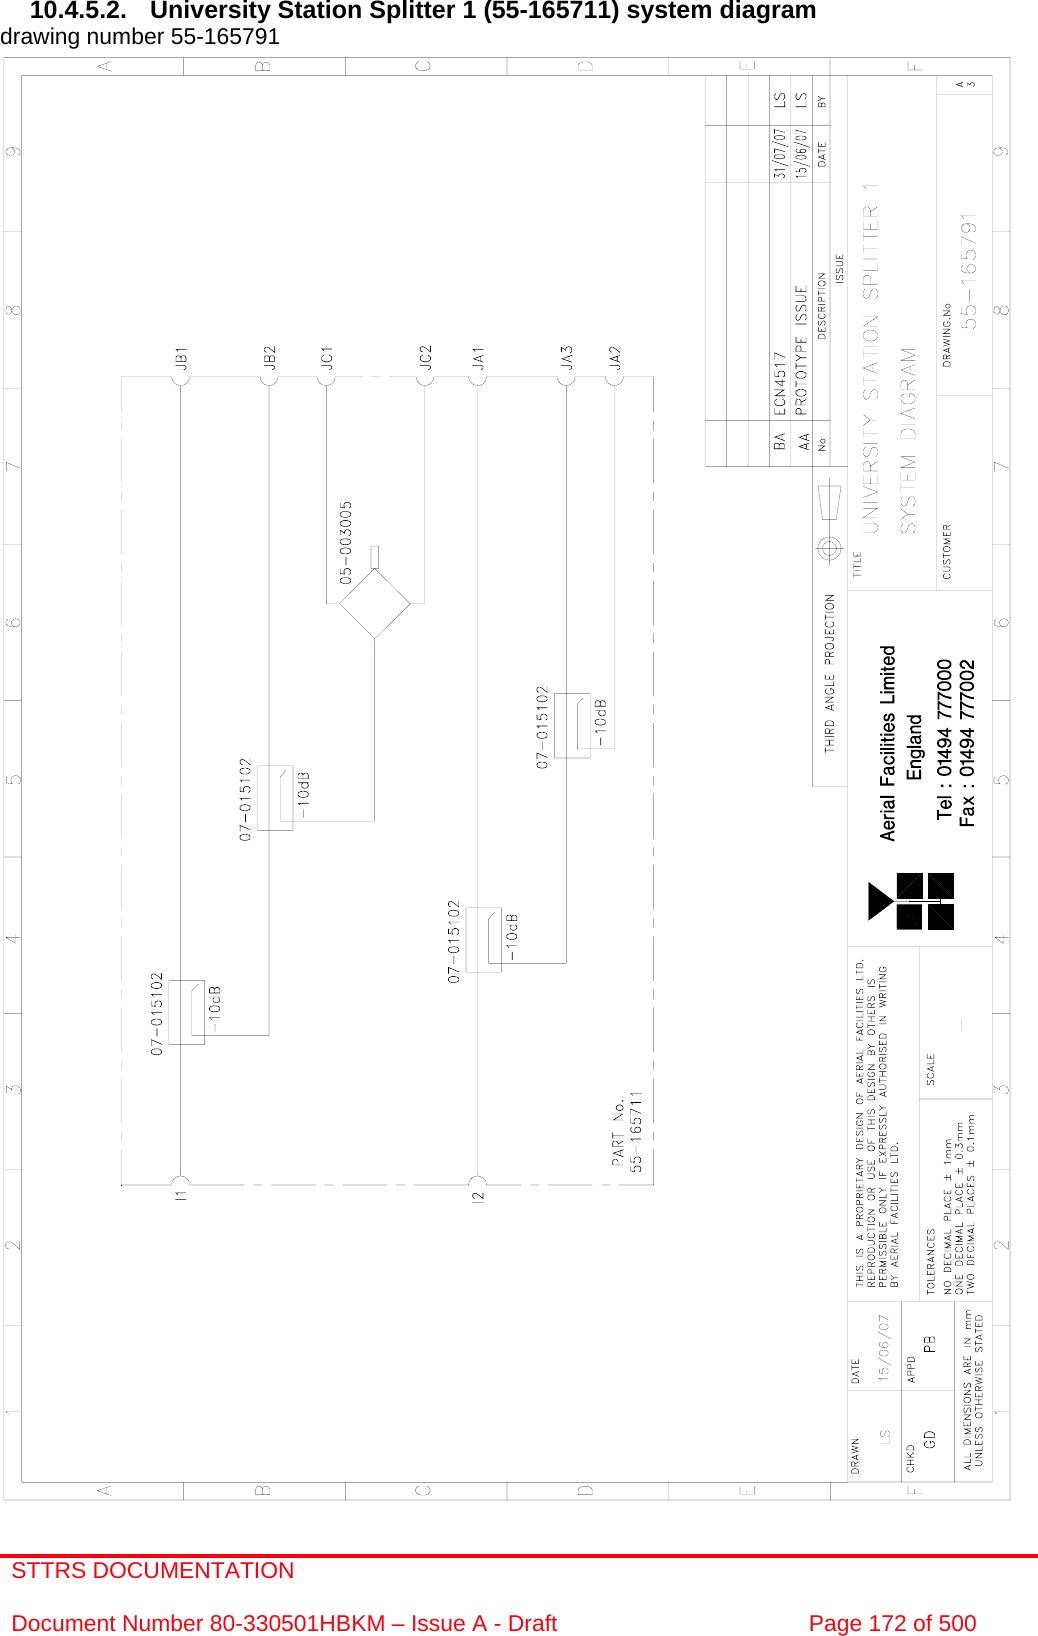 STTRS DOCUMENTATION  Document Number 80-330501HBKM – Issue A - Draft  Page 172 of 500   10.4.5.2.  University Station Splitter 1 (55-165711) system diagram drawing number 55-165791                                                     